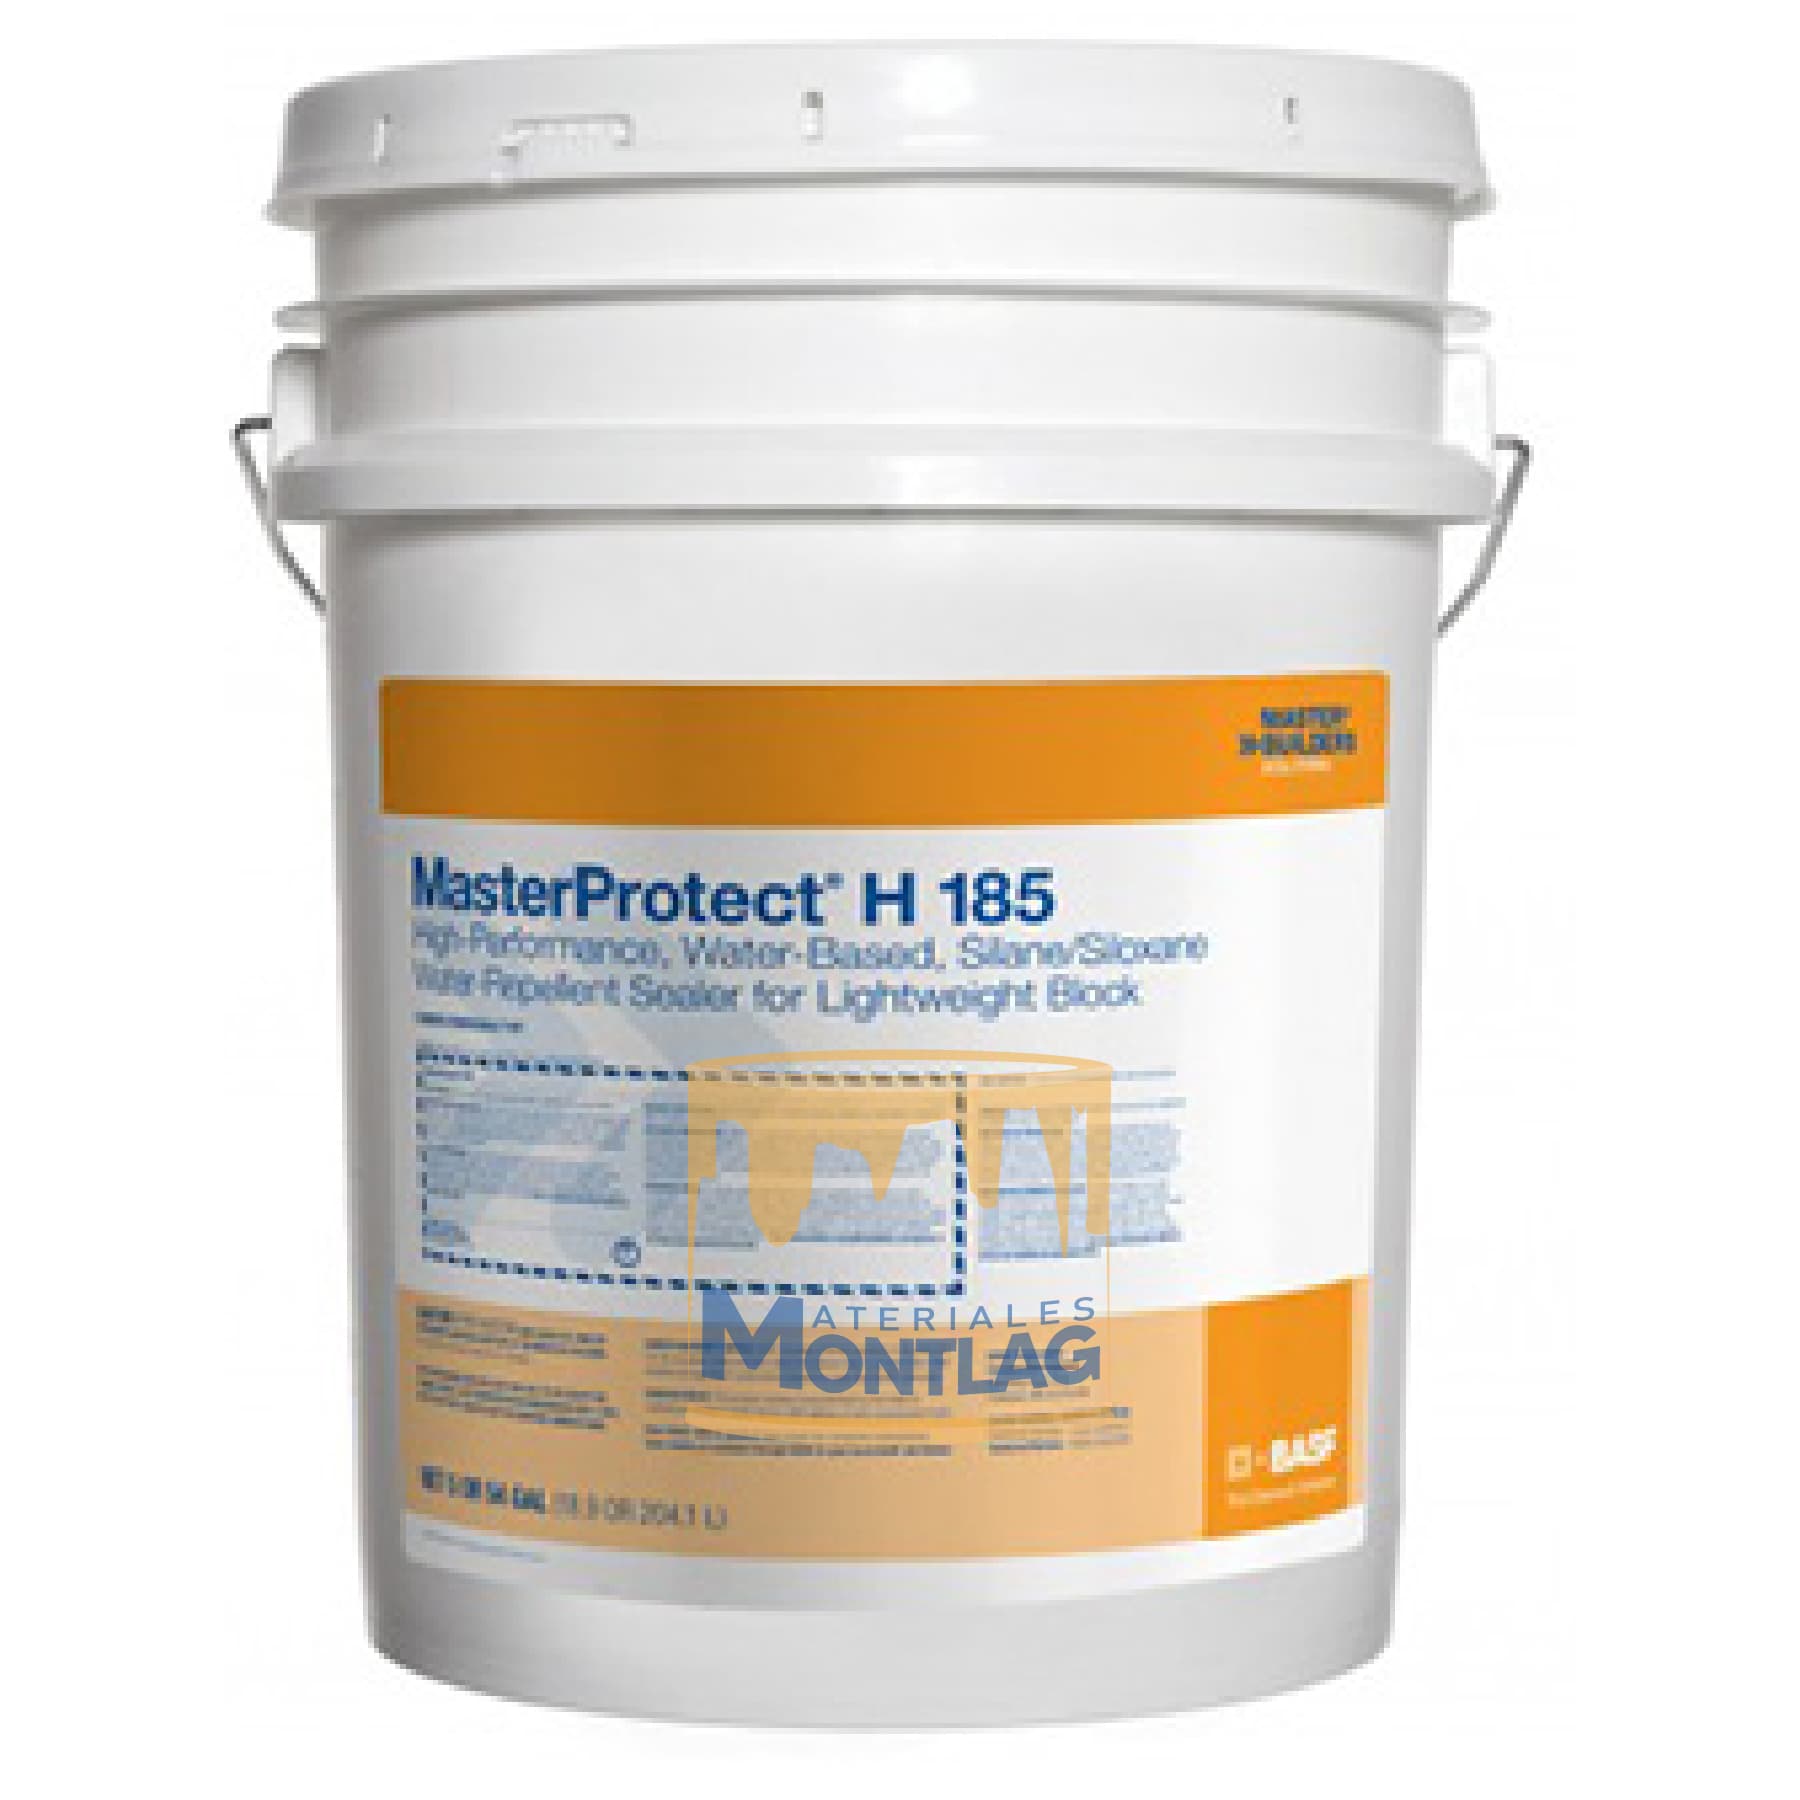 Materiales Montlag - MasterProtect H 185